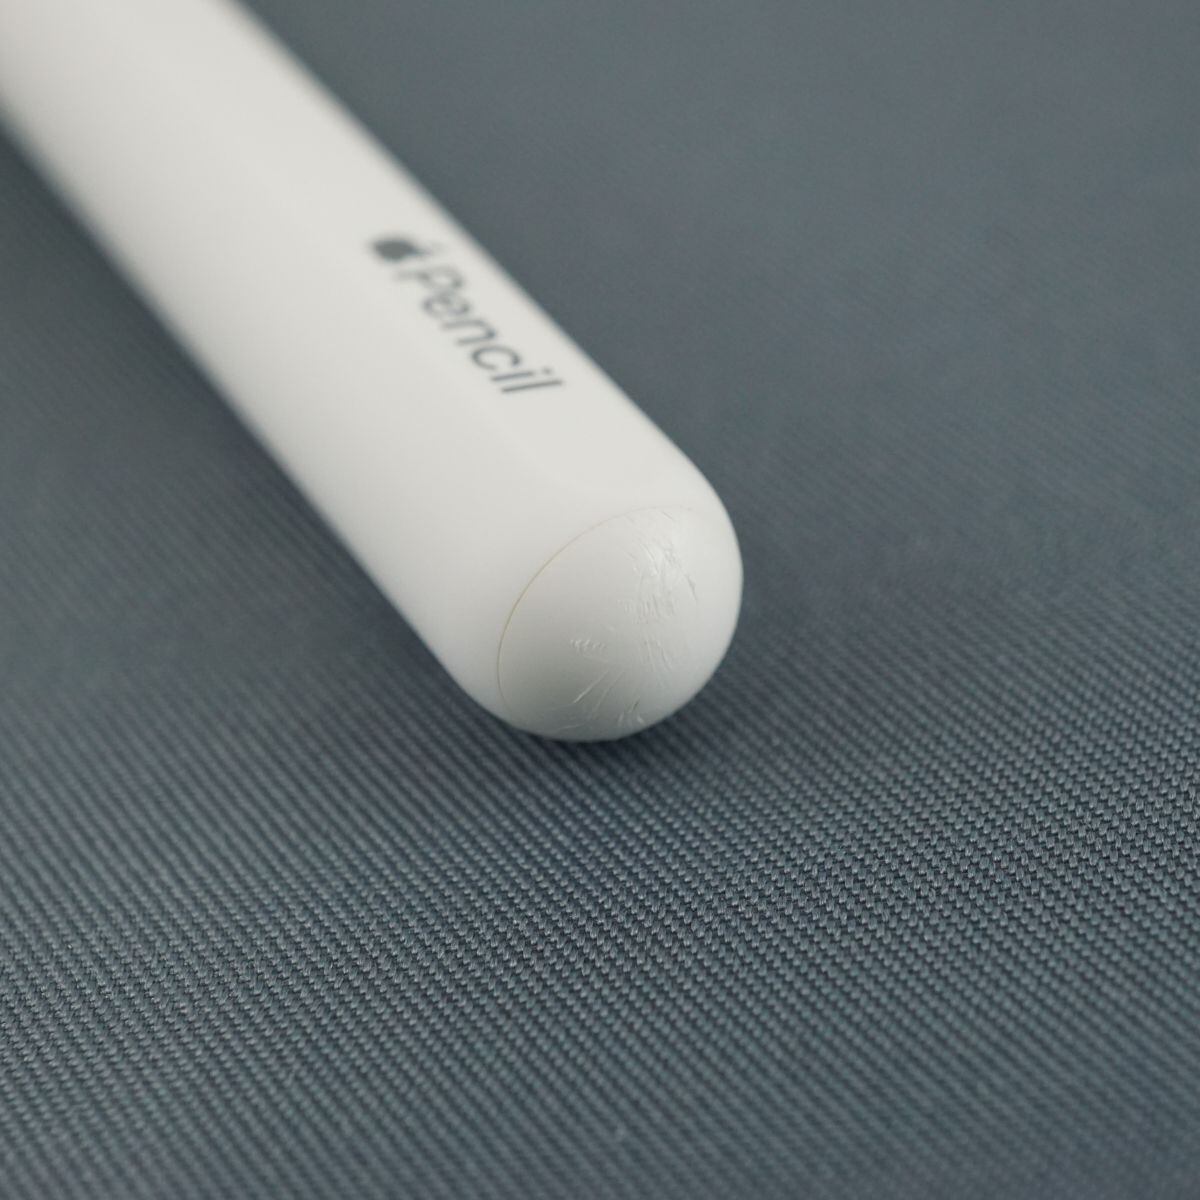 Apple Pencil USED品 本体のみ 第二世代 MU8F2JA タッチペン アップルペンシル iPad Pro用 完動品 安心保証 即日発送  KR V8443